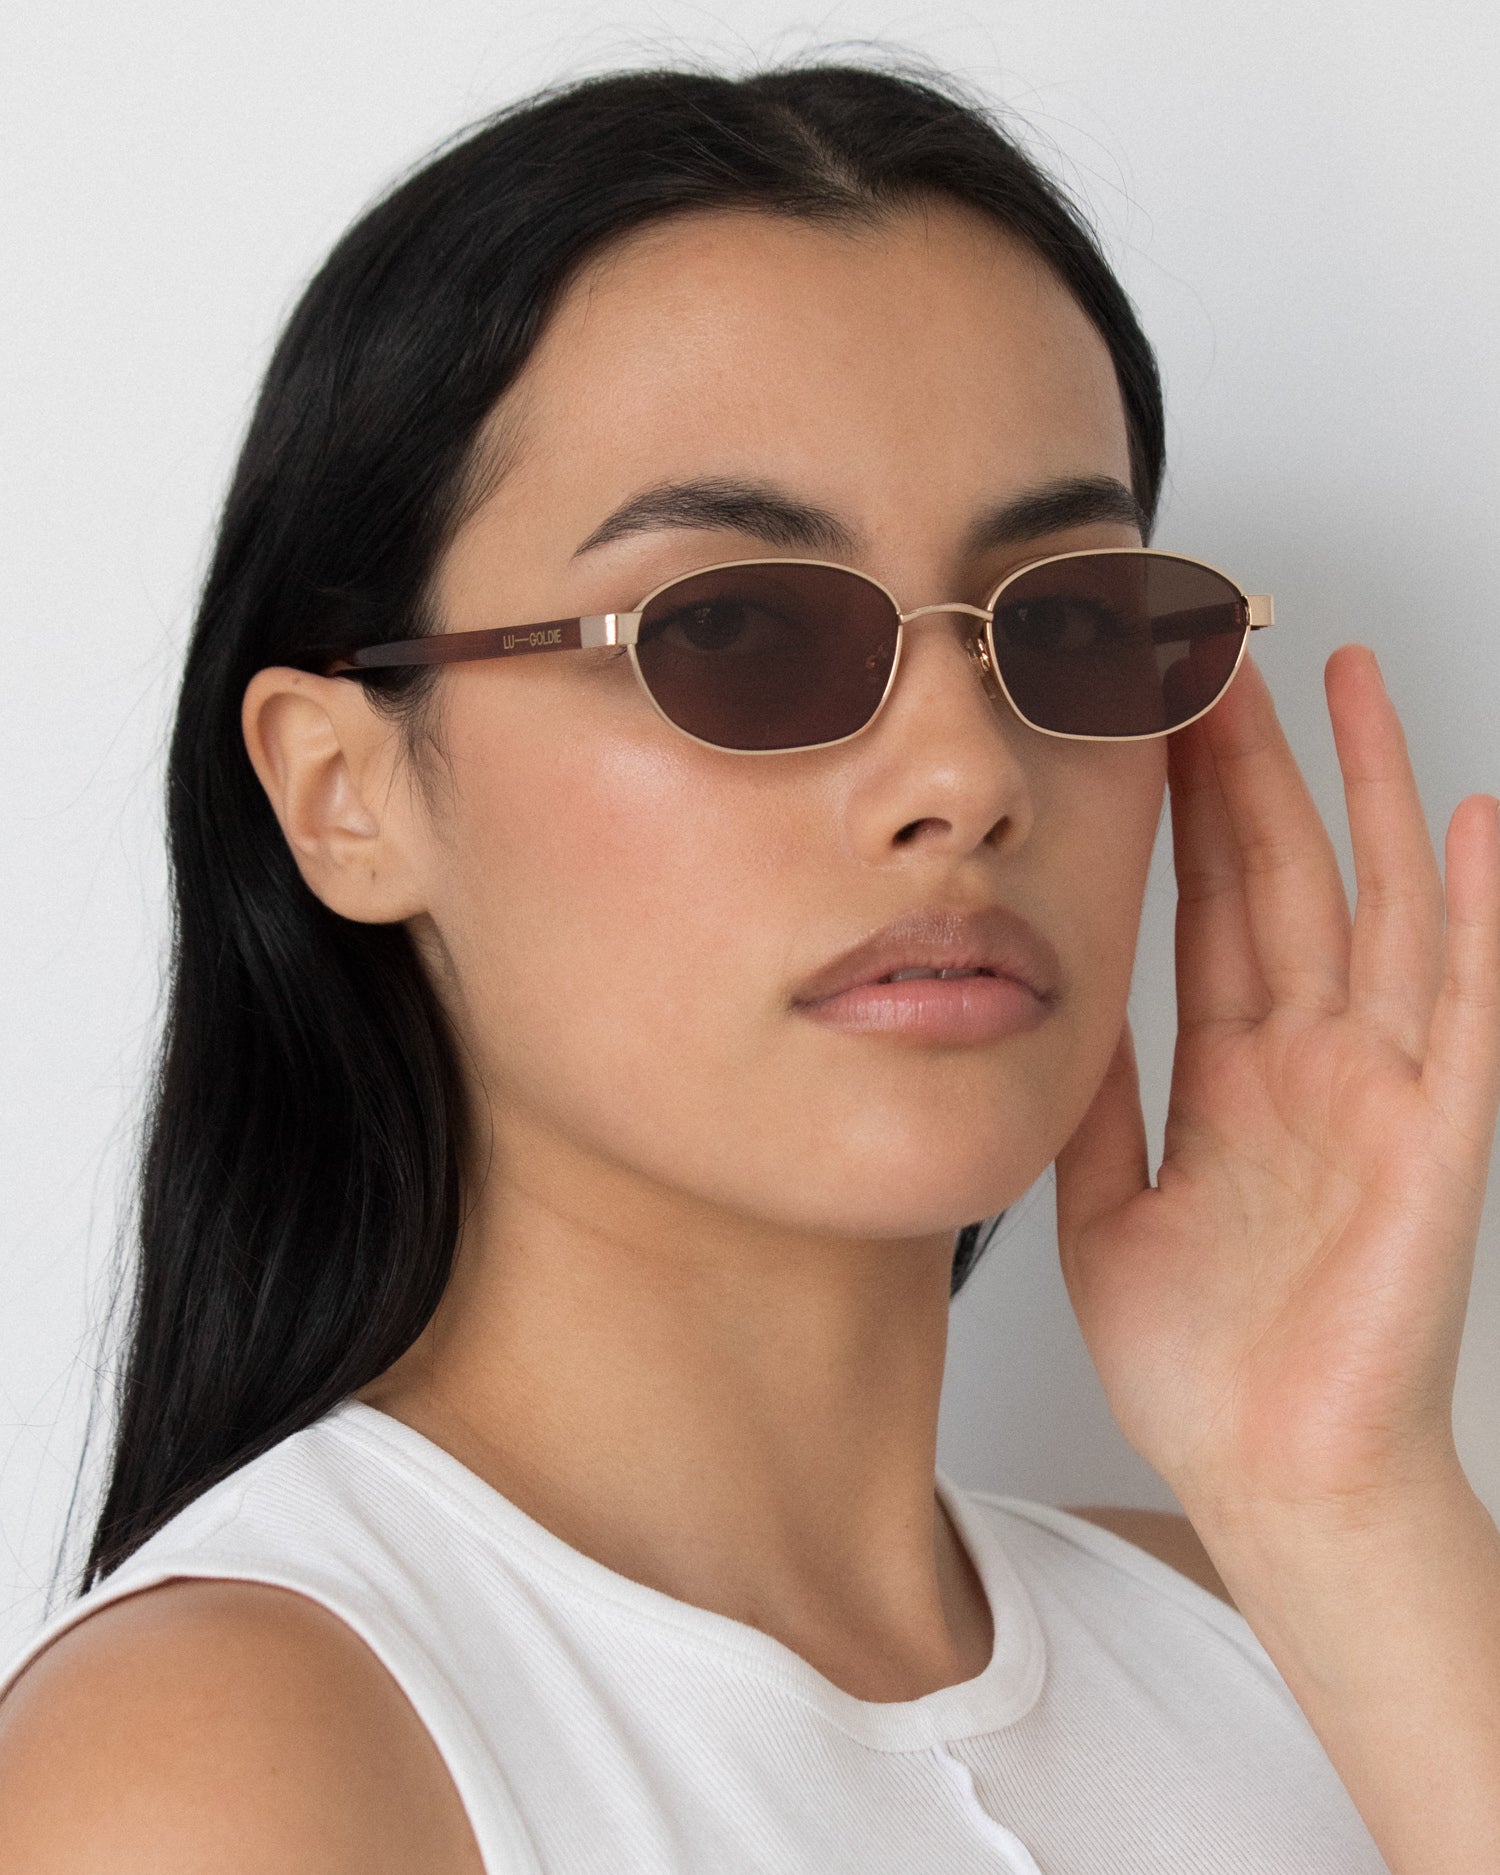 Lara Sunglasses in Chestnut by LU GOLDIE Eyewear